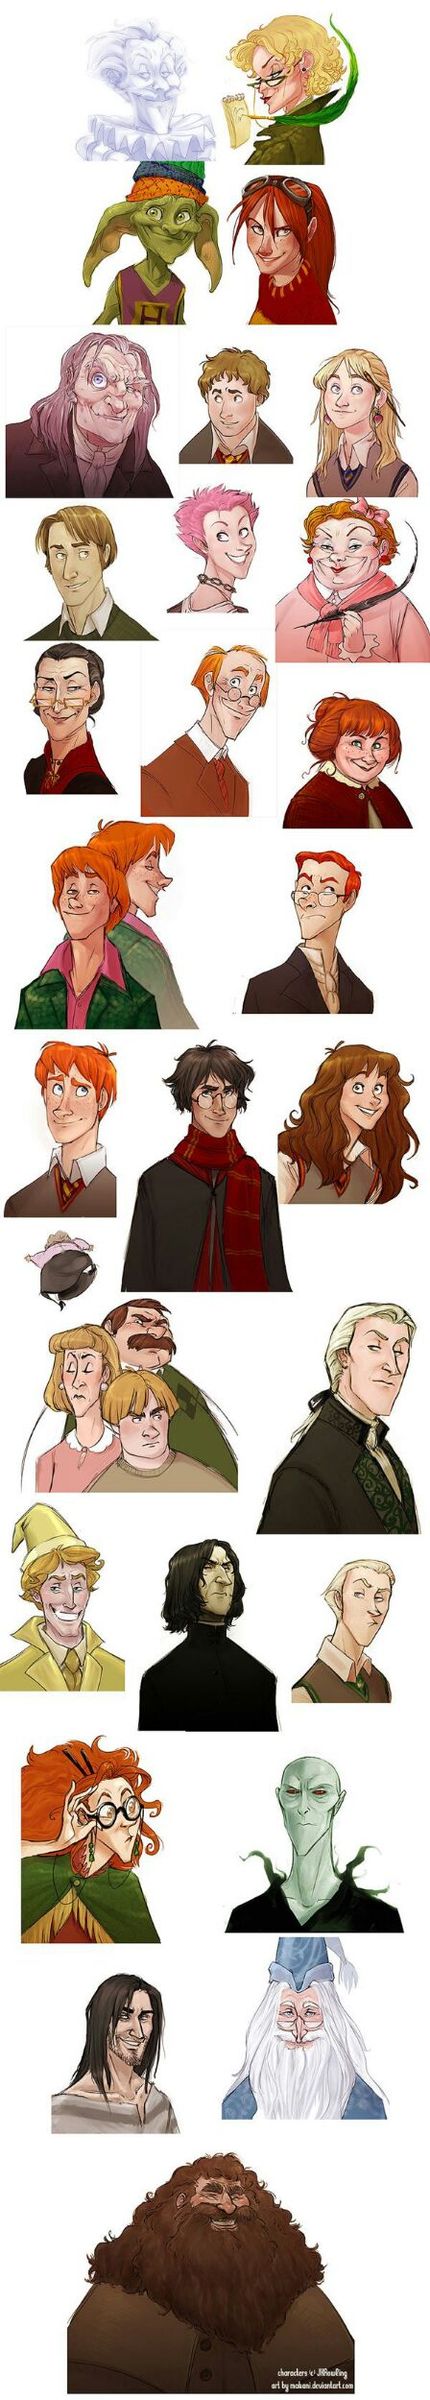 Se Harry Potter fosse da Disney... - meme